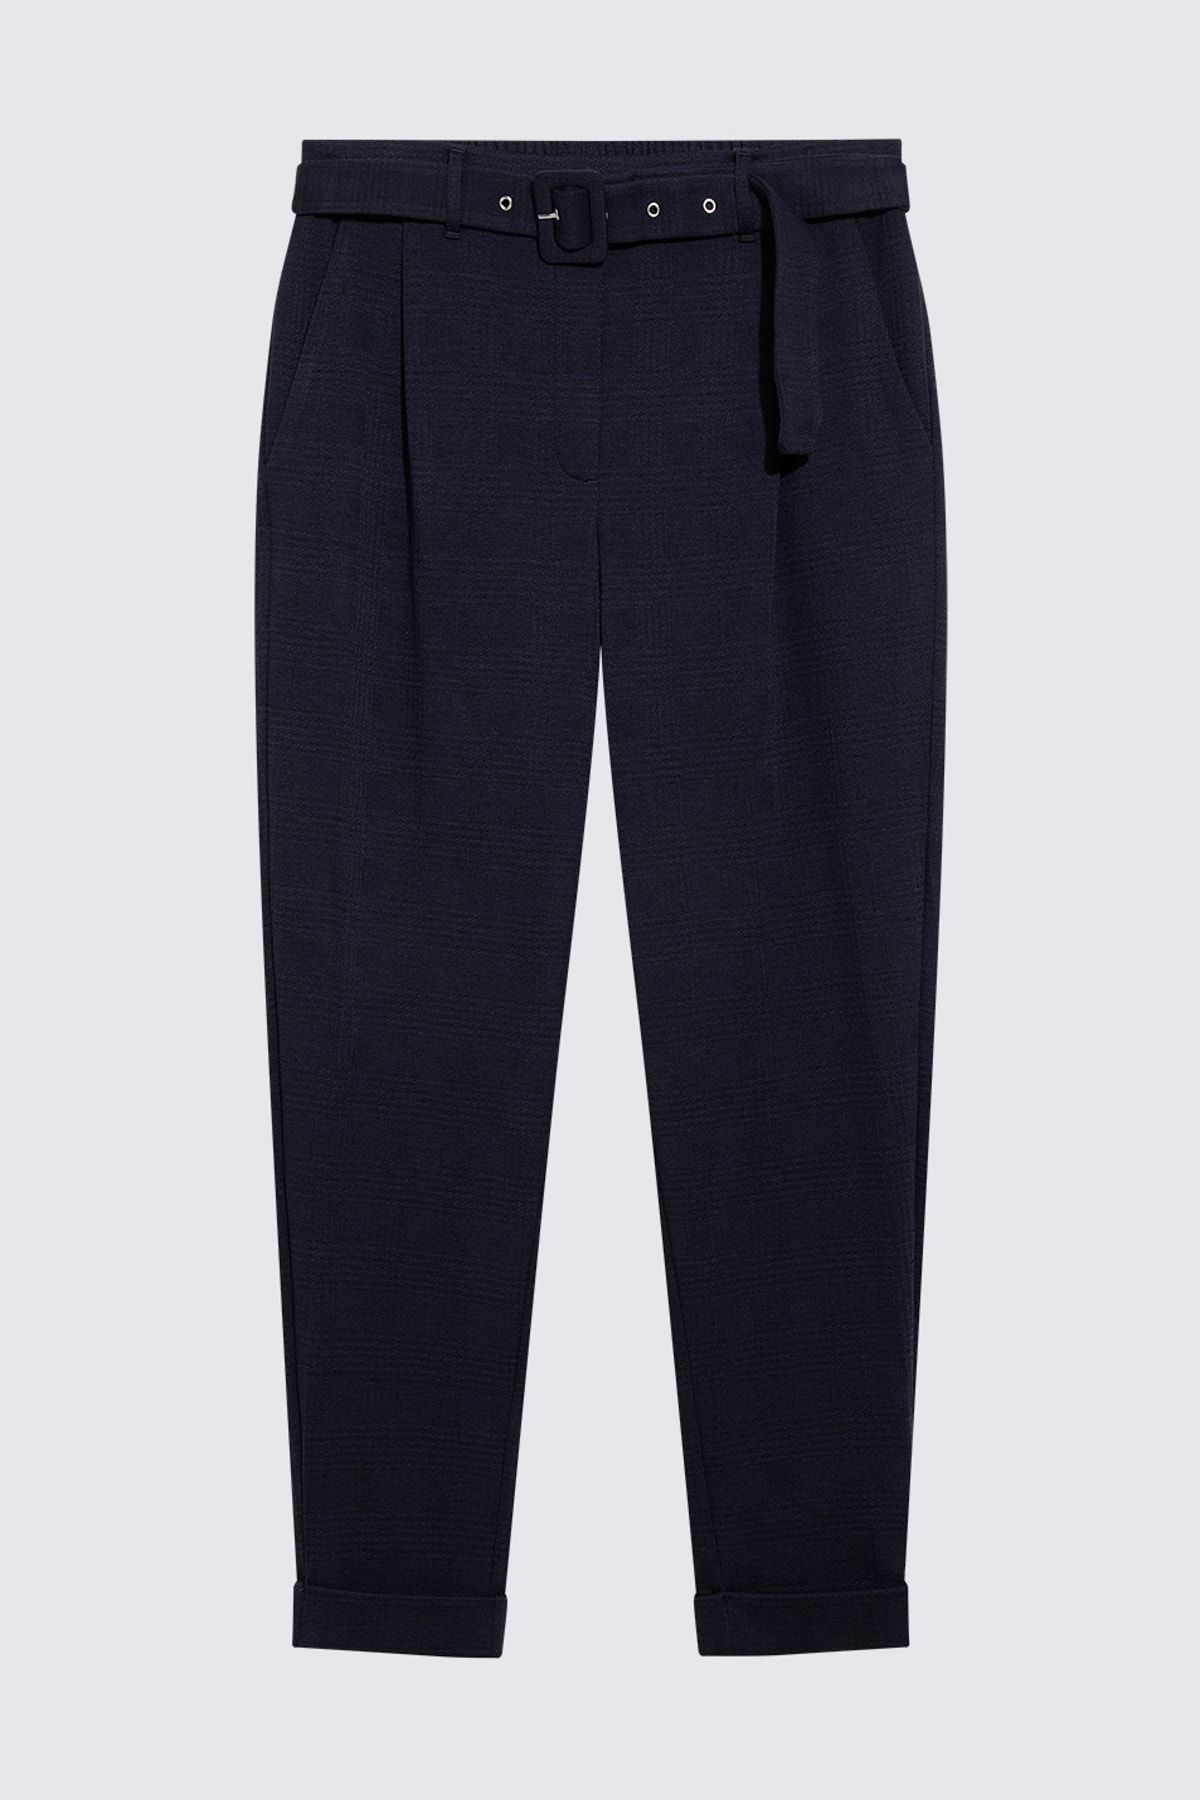 Marks & Spencer Kadın Lacivert Kemerli Pantolon T57007198M